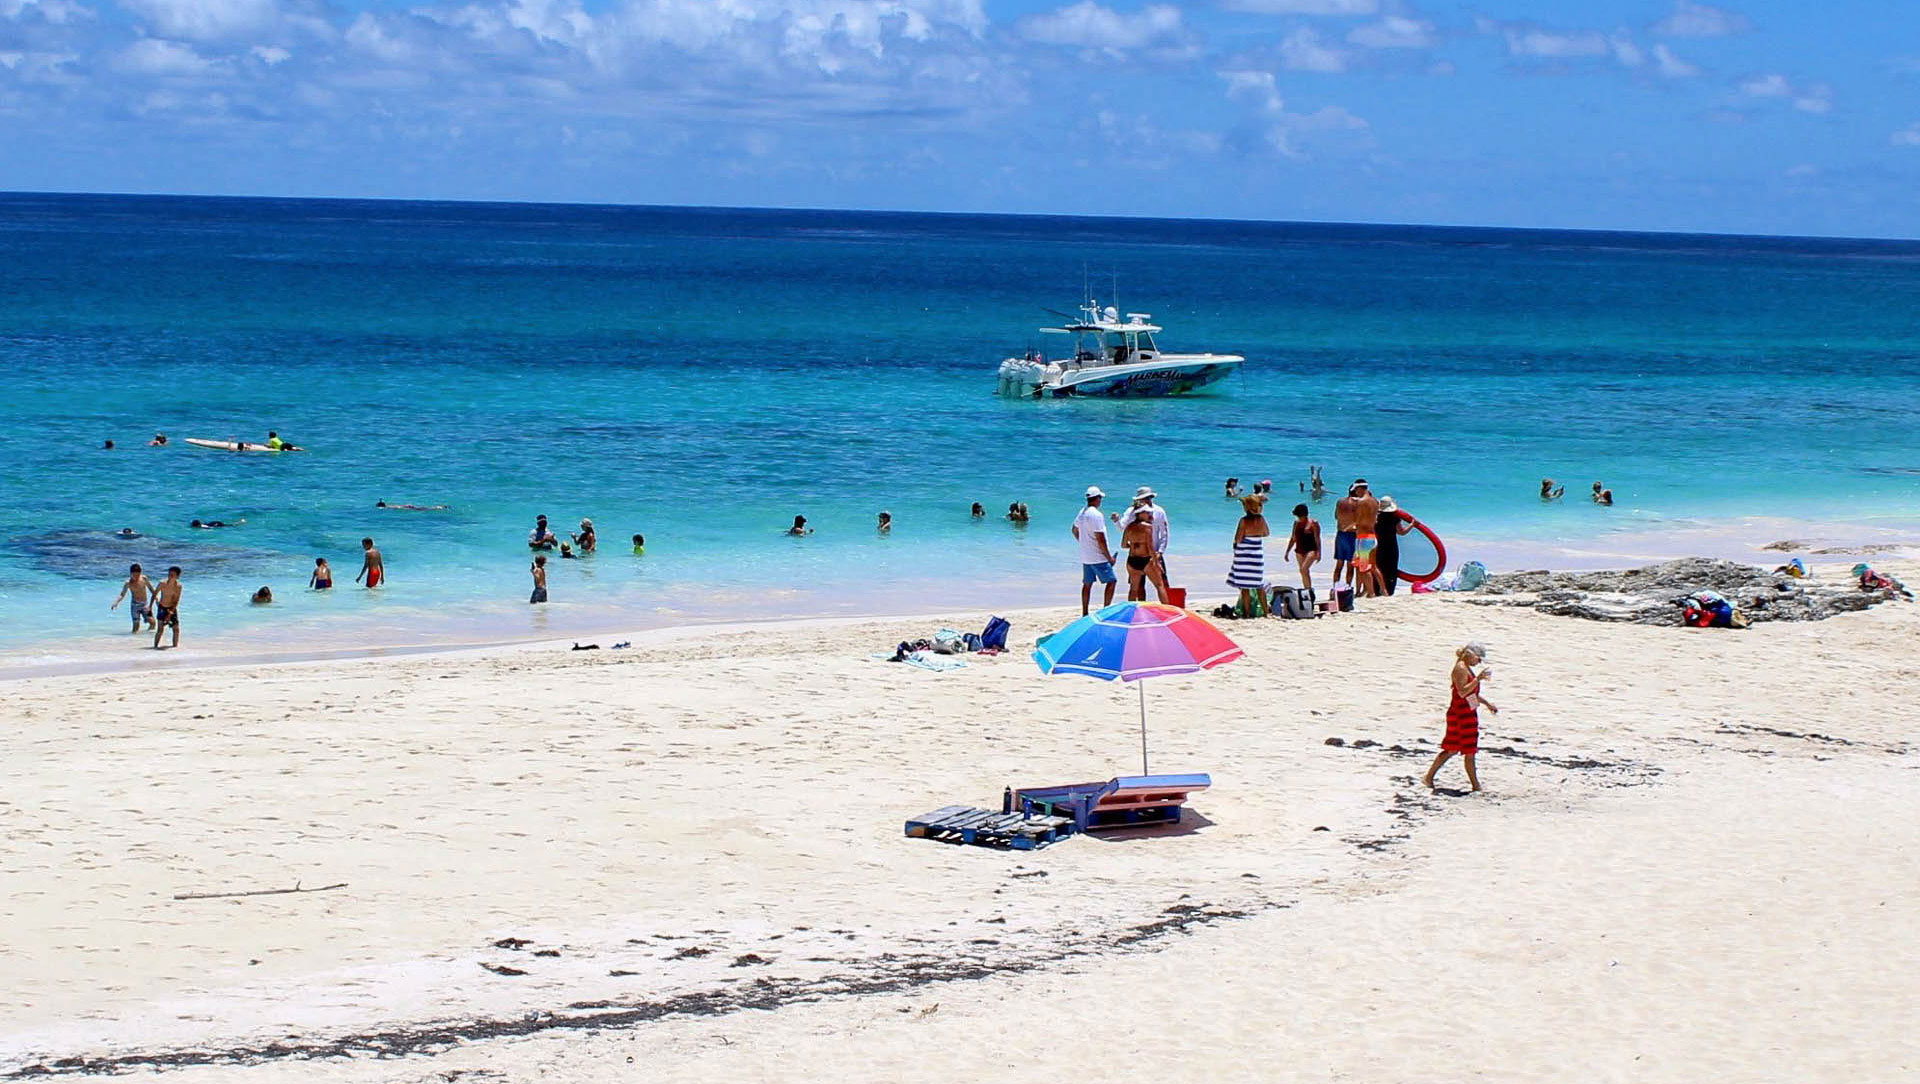 Nipper's Beach bar on Guana Cay - The beach